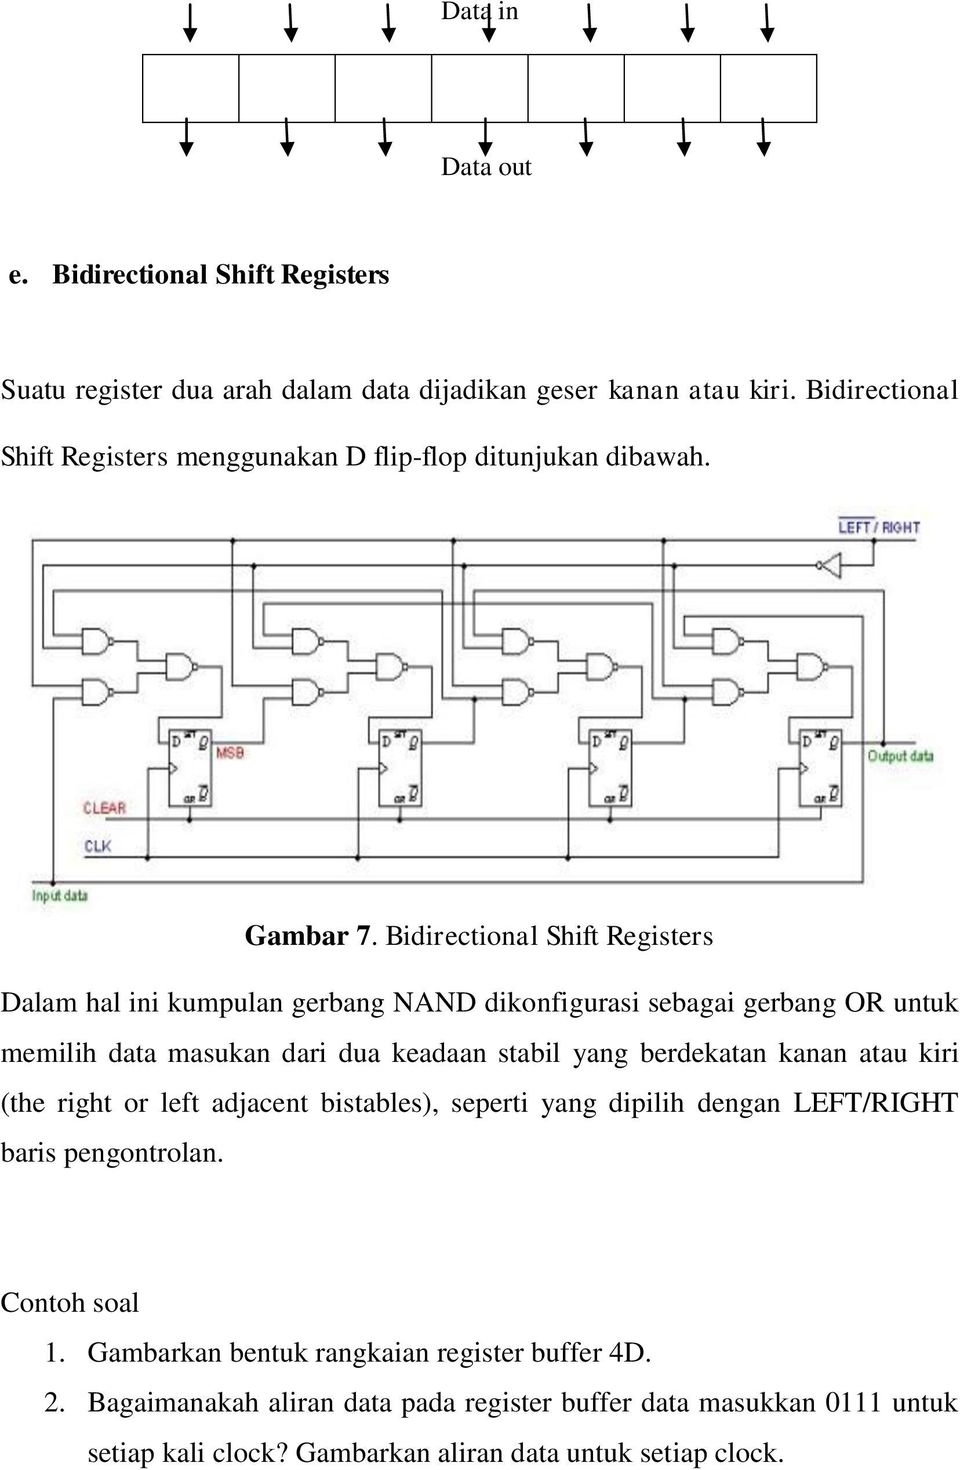 Bidirectional Shift Registers Dalam hal ini kumpulan gerbang NAND dikonfigurasi sebagai gerbang OR untuk memilih data masukan dari dua keadaan stabil yang berdekatan